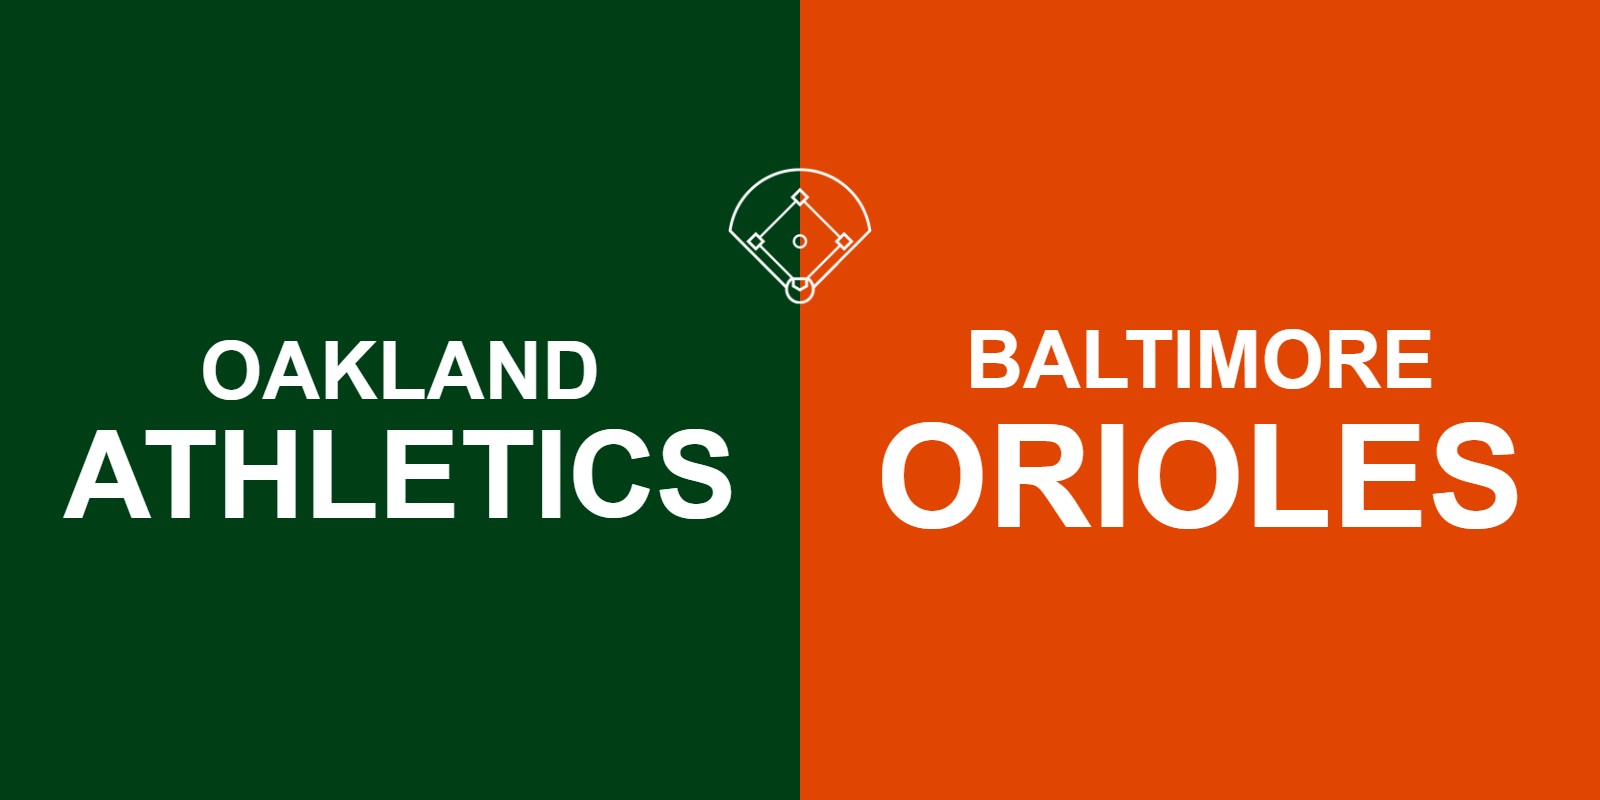 Athletics vs Orioles